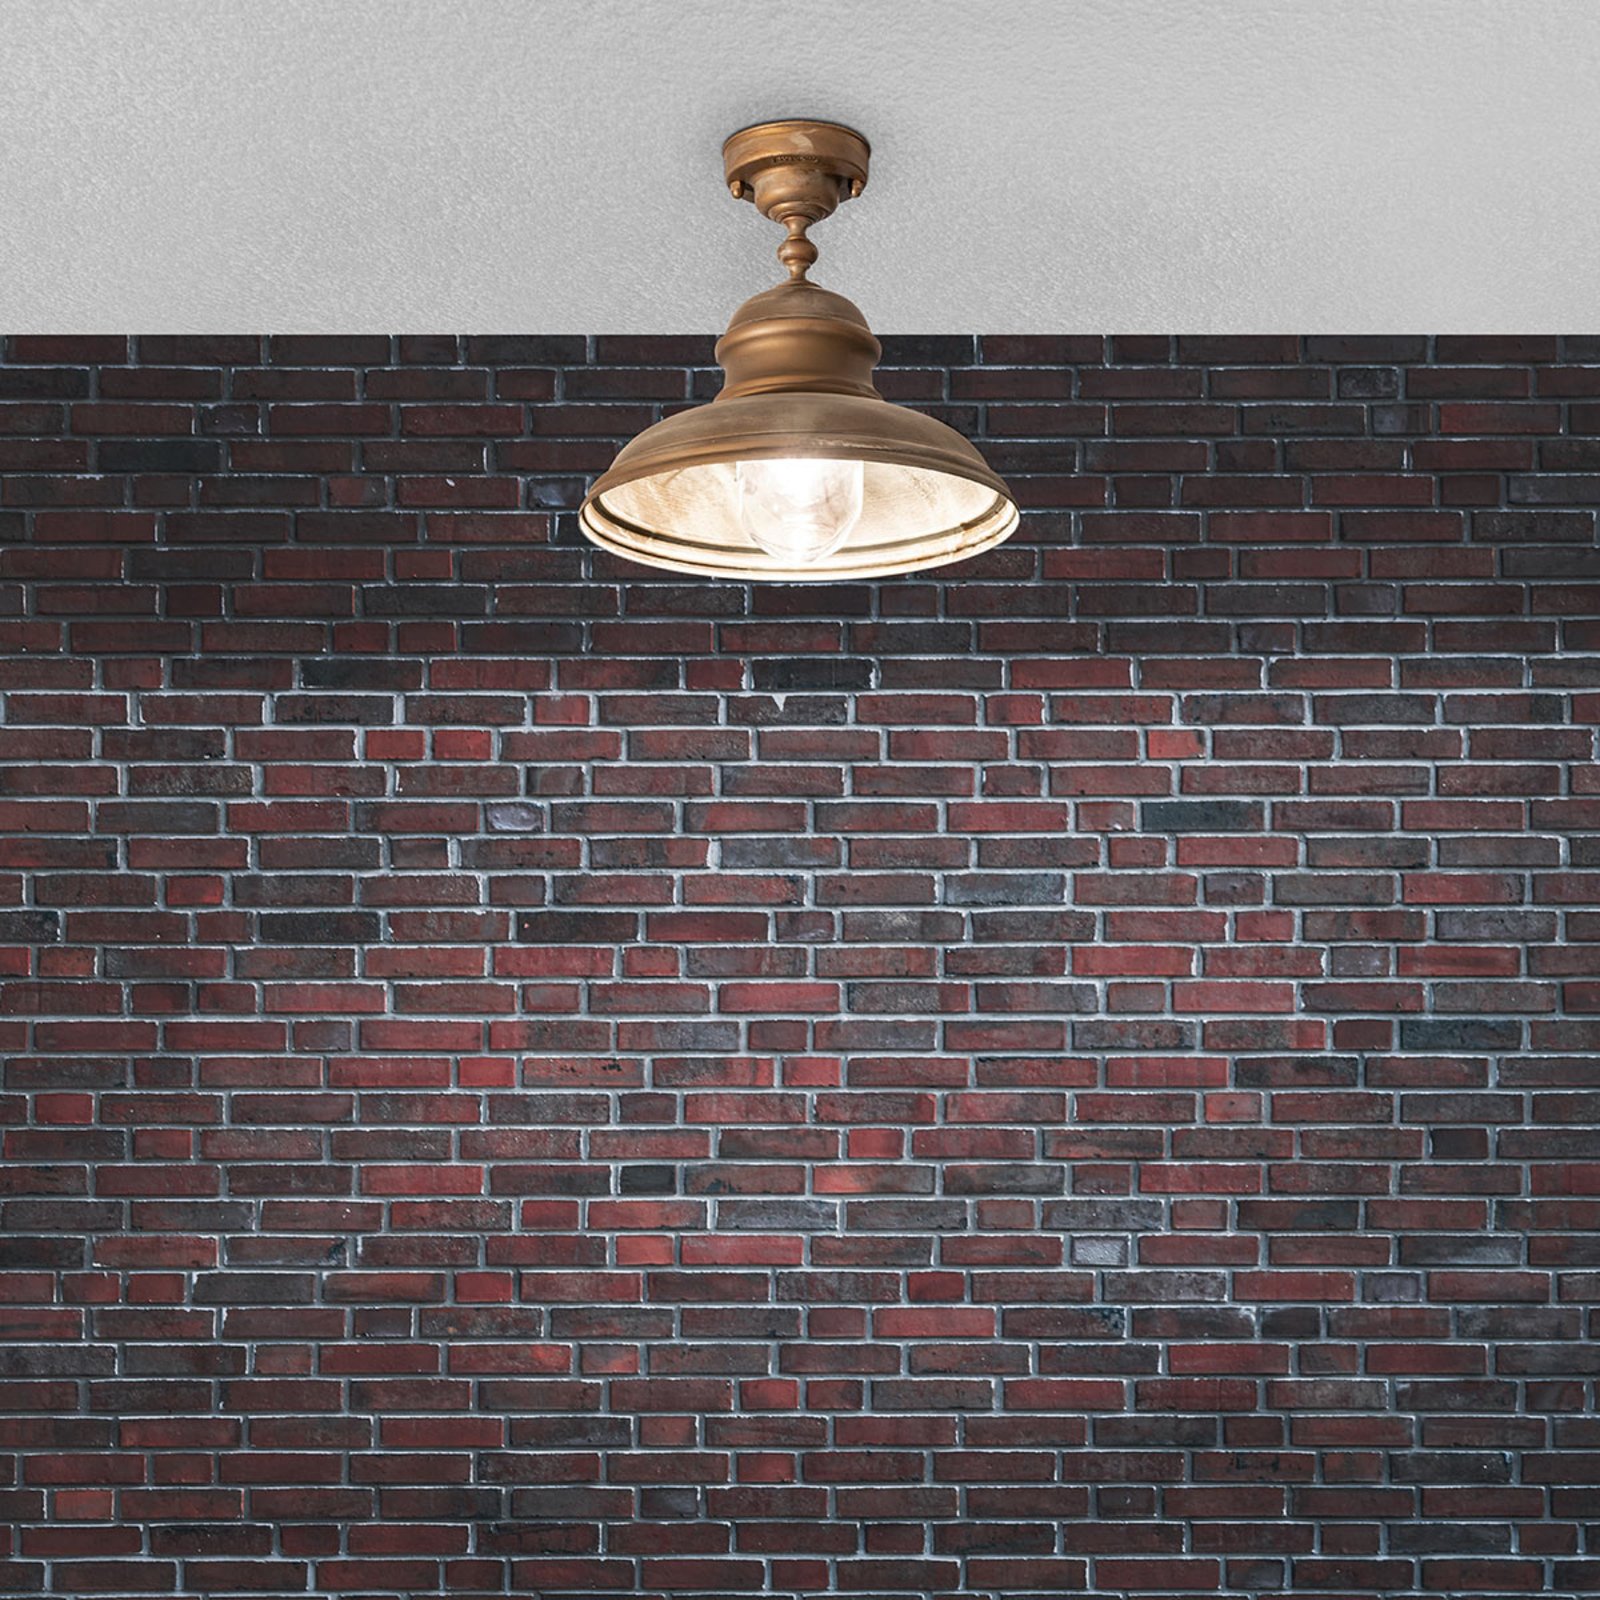 Riccardo ceiling light for outdoor use